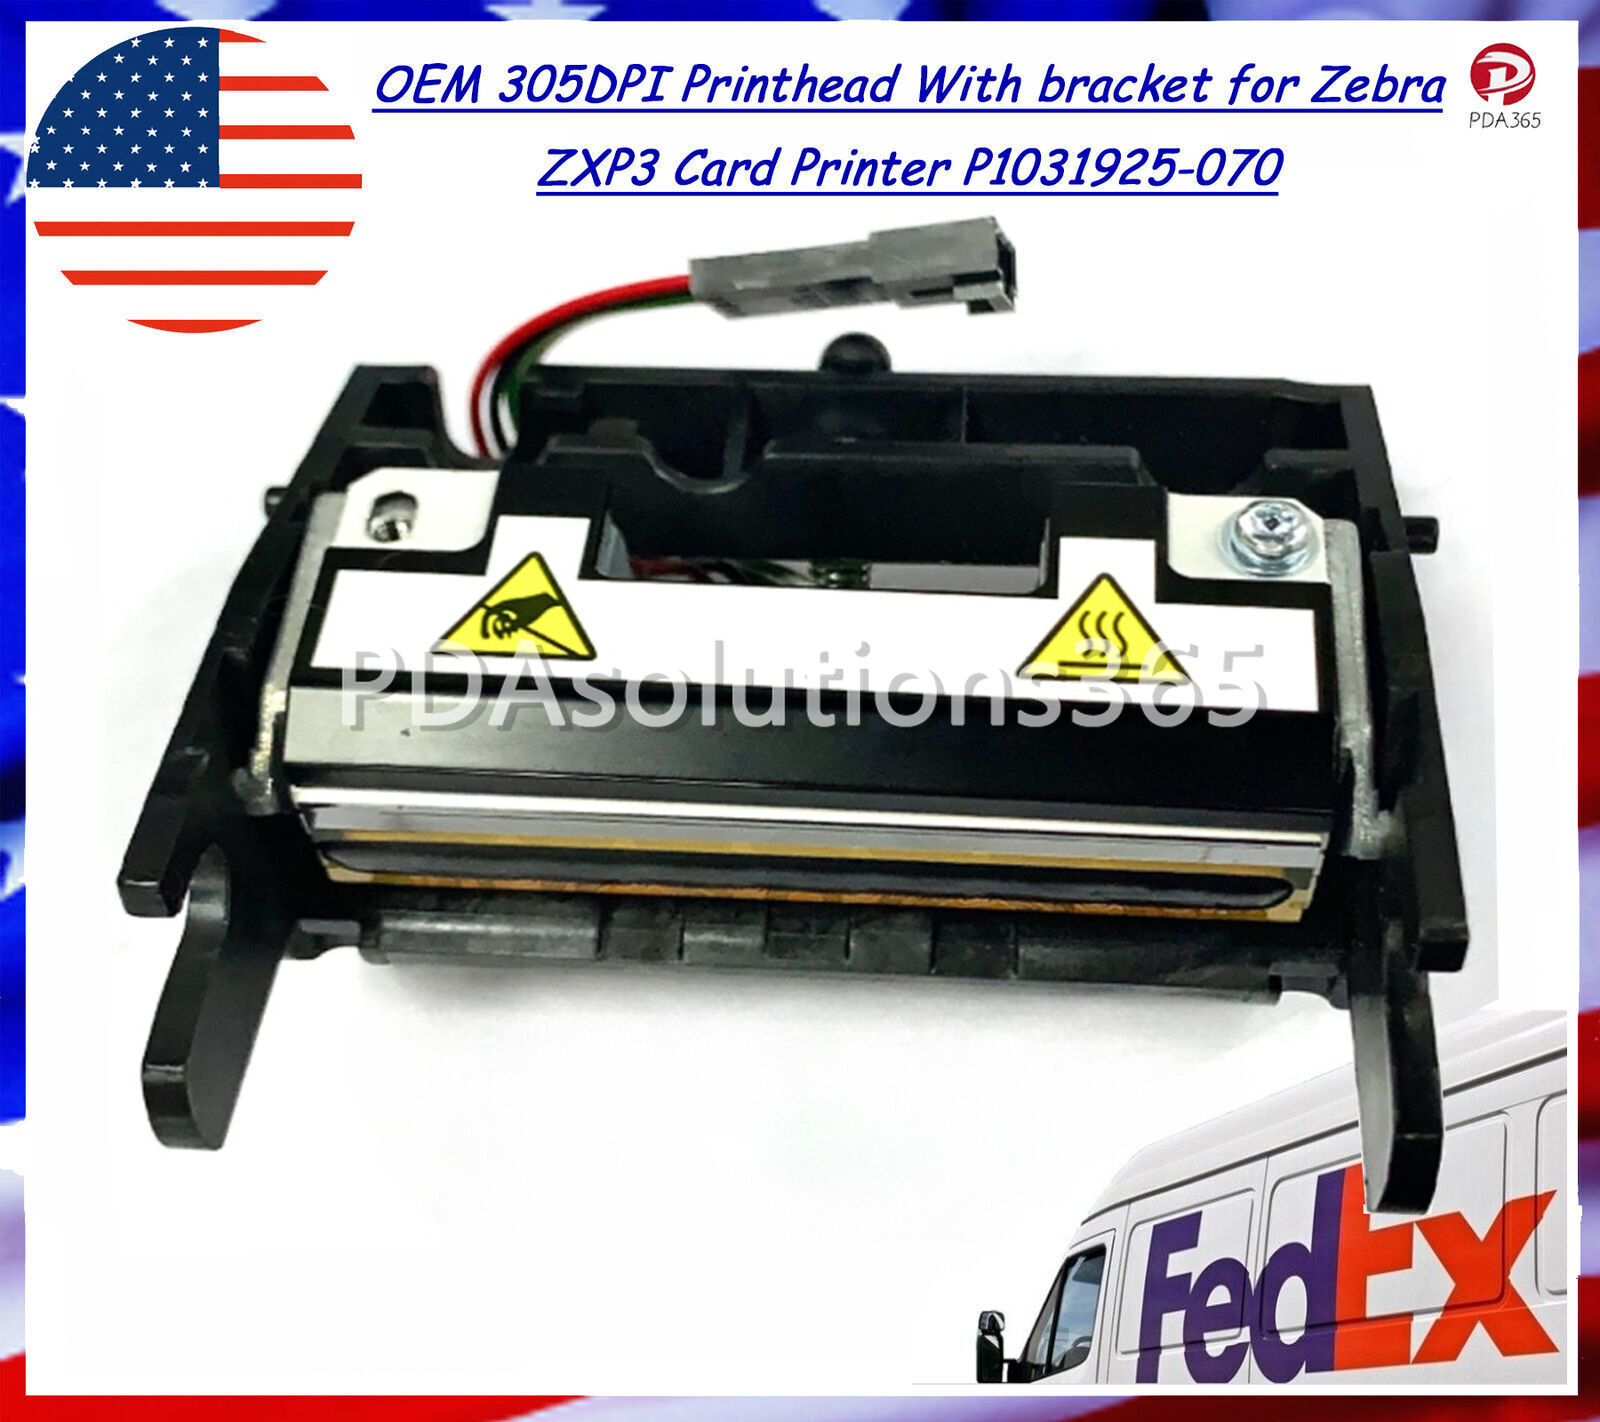 OEM 305DPI Printhead With bracket for Zebra ZXP3 Card Printer P1031925-070